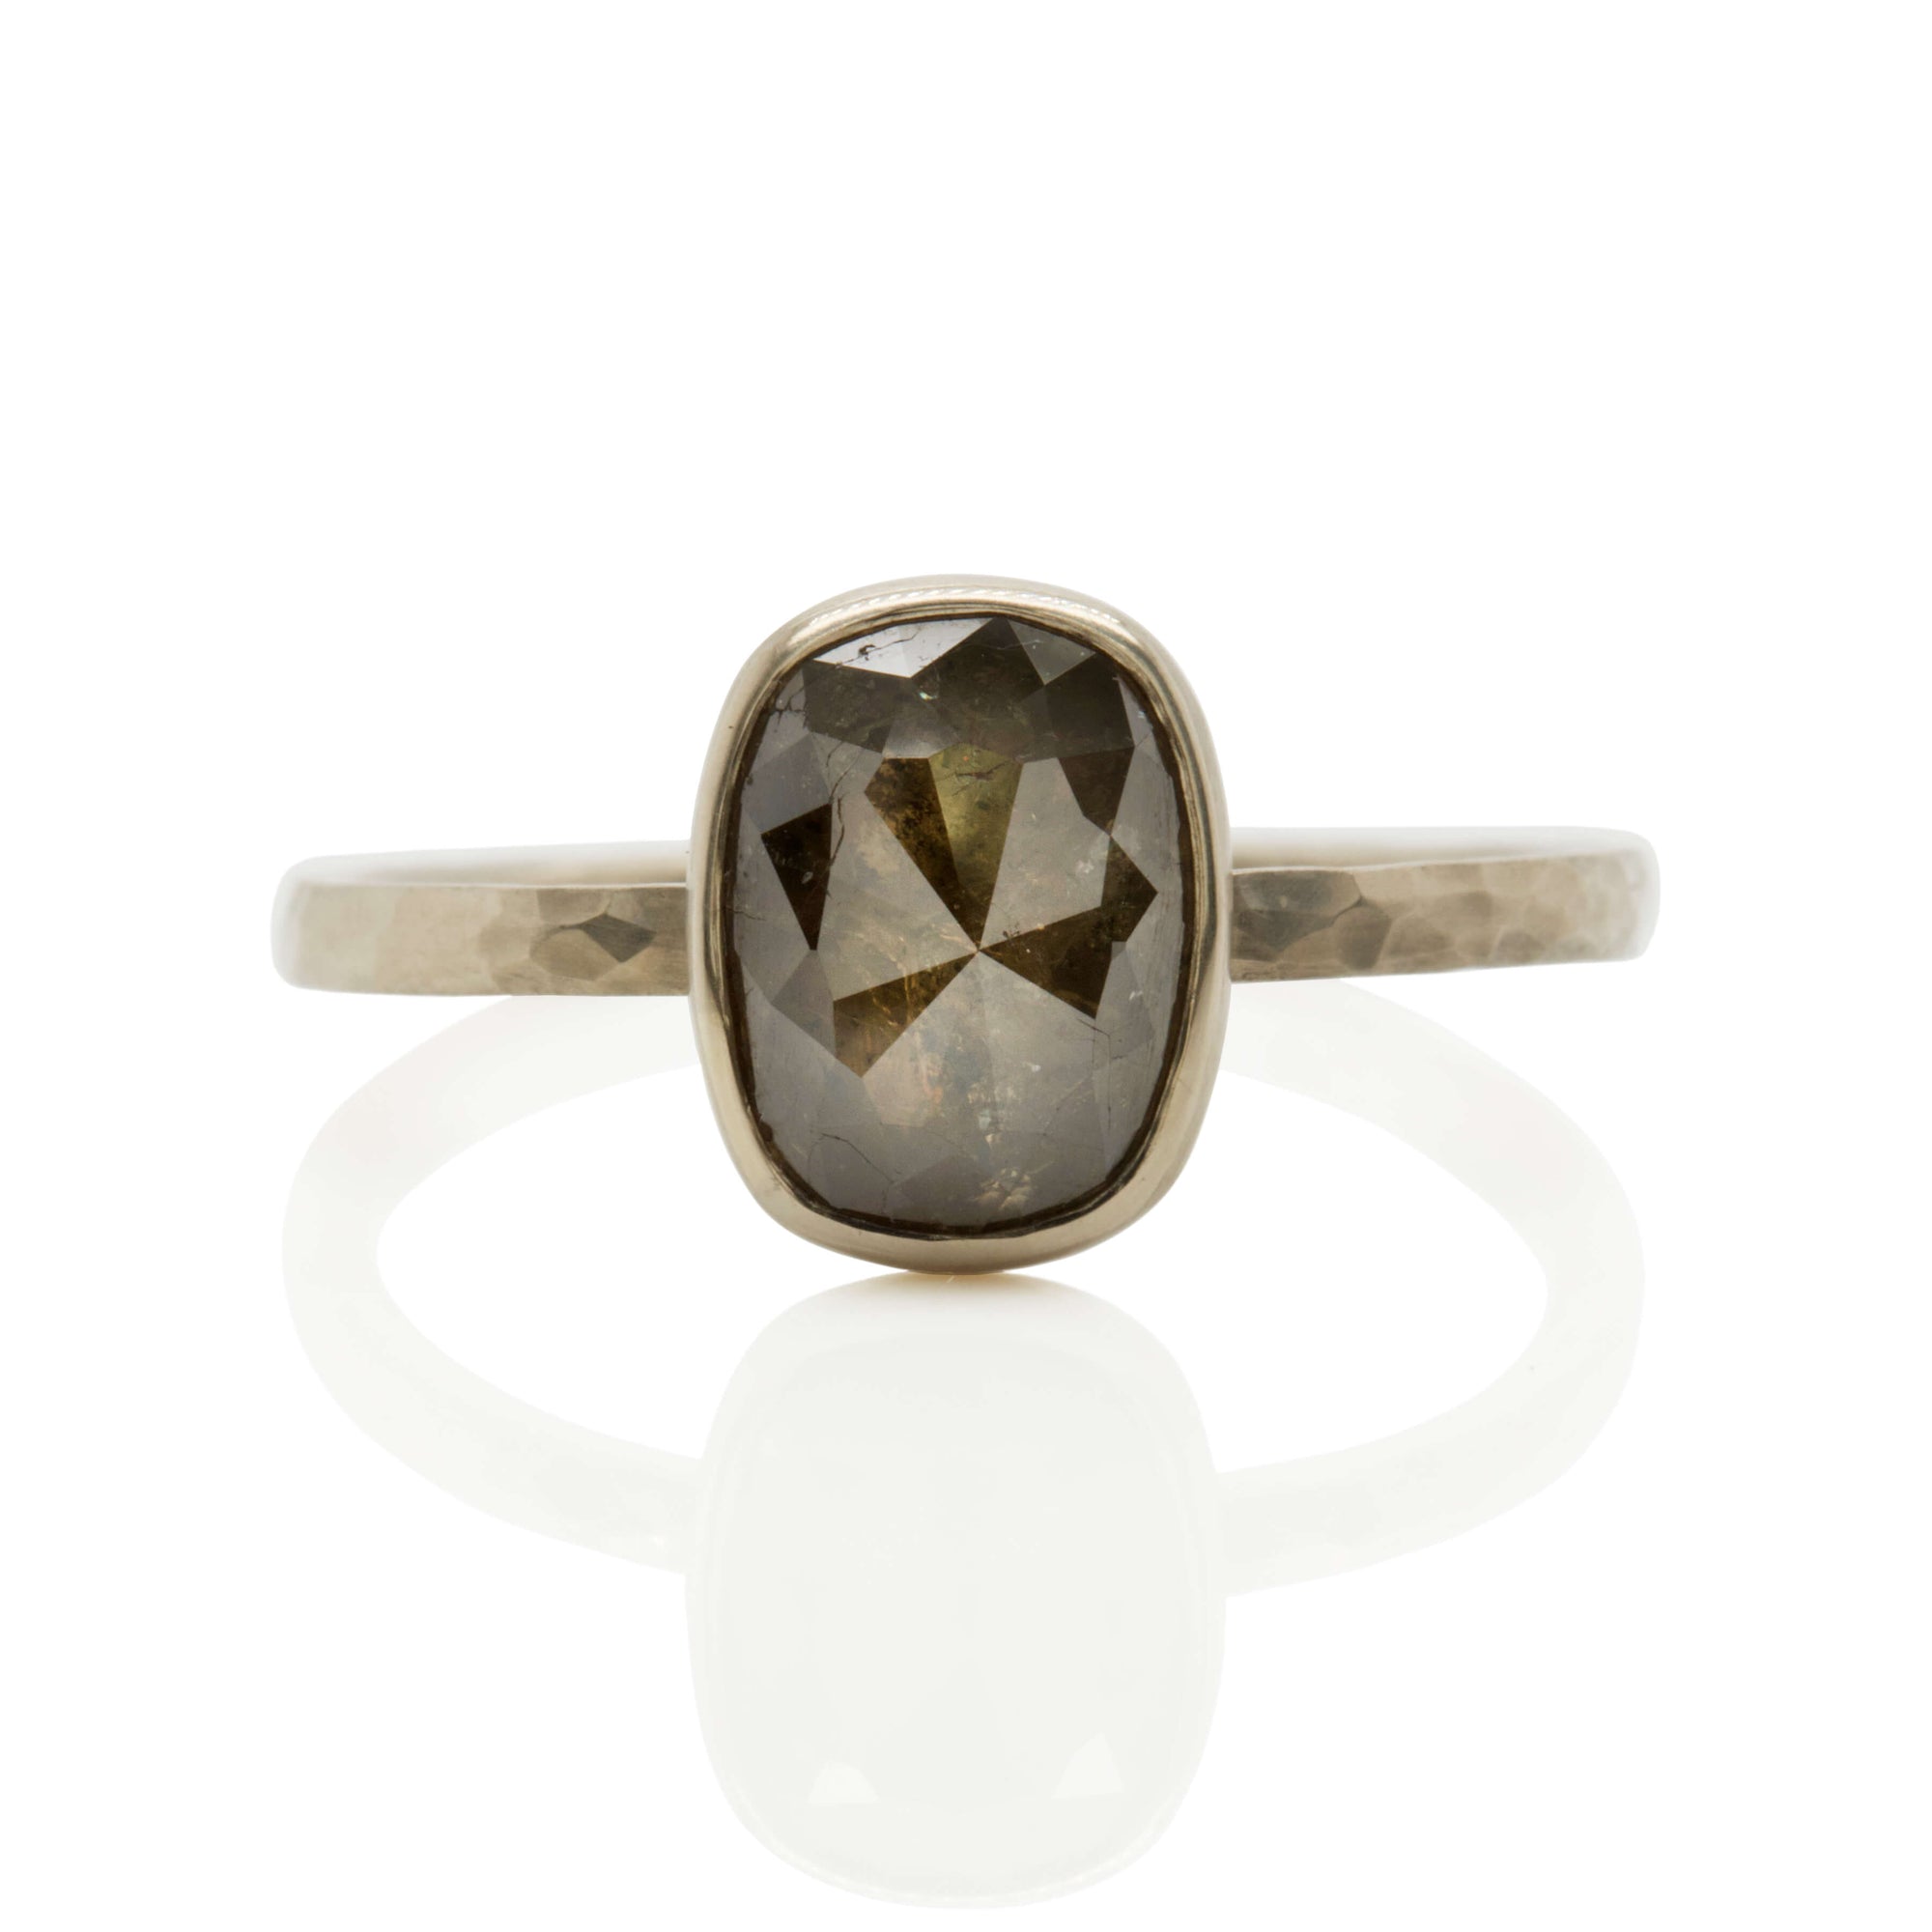 Cushion cut brown diamond engagement ring in palladium white gold. Handmade by EC Design Jewelry in Minneapolis, MN.